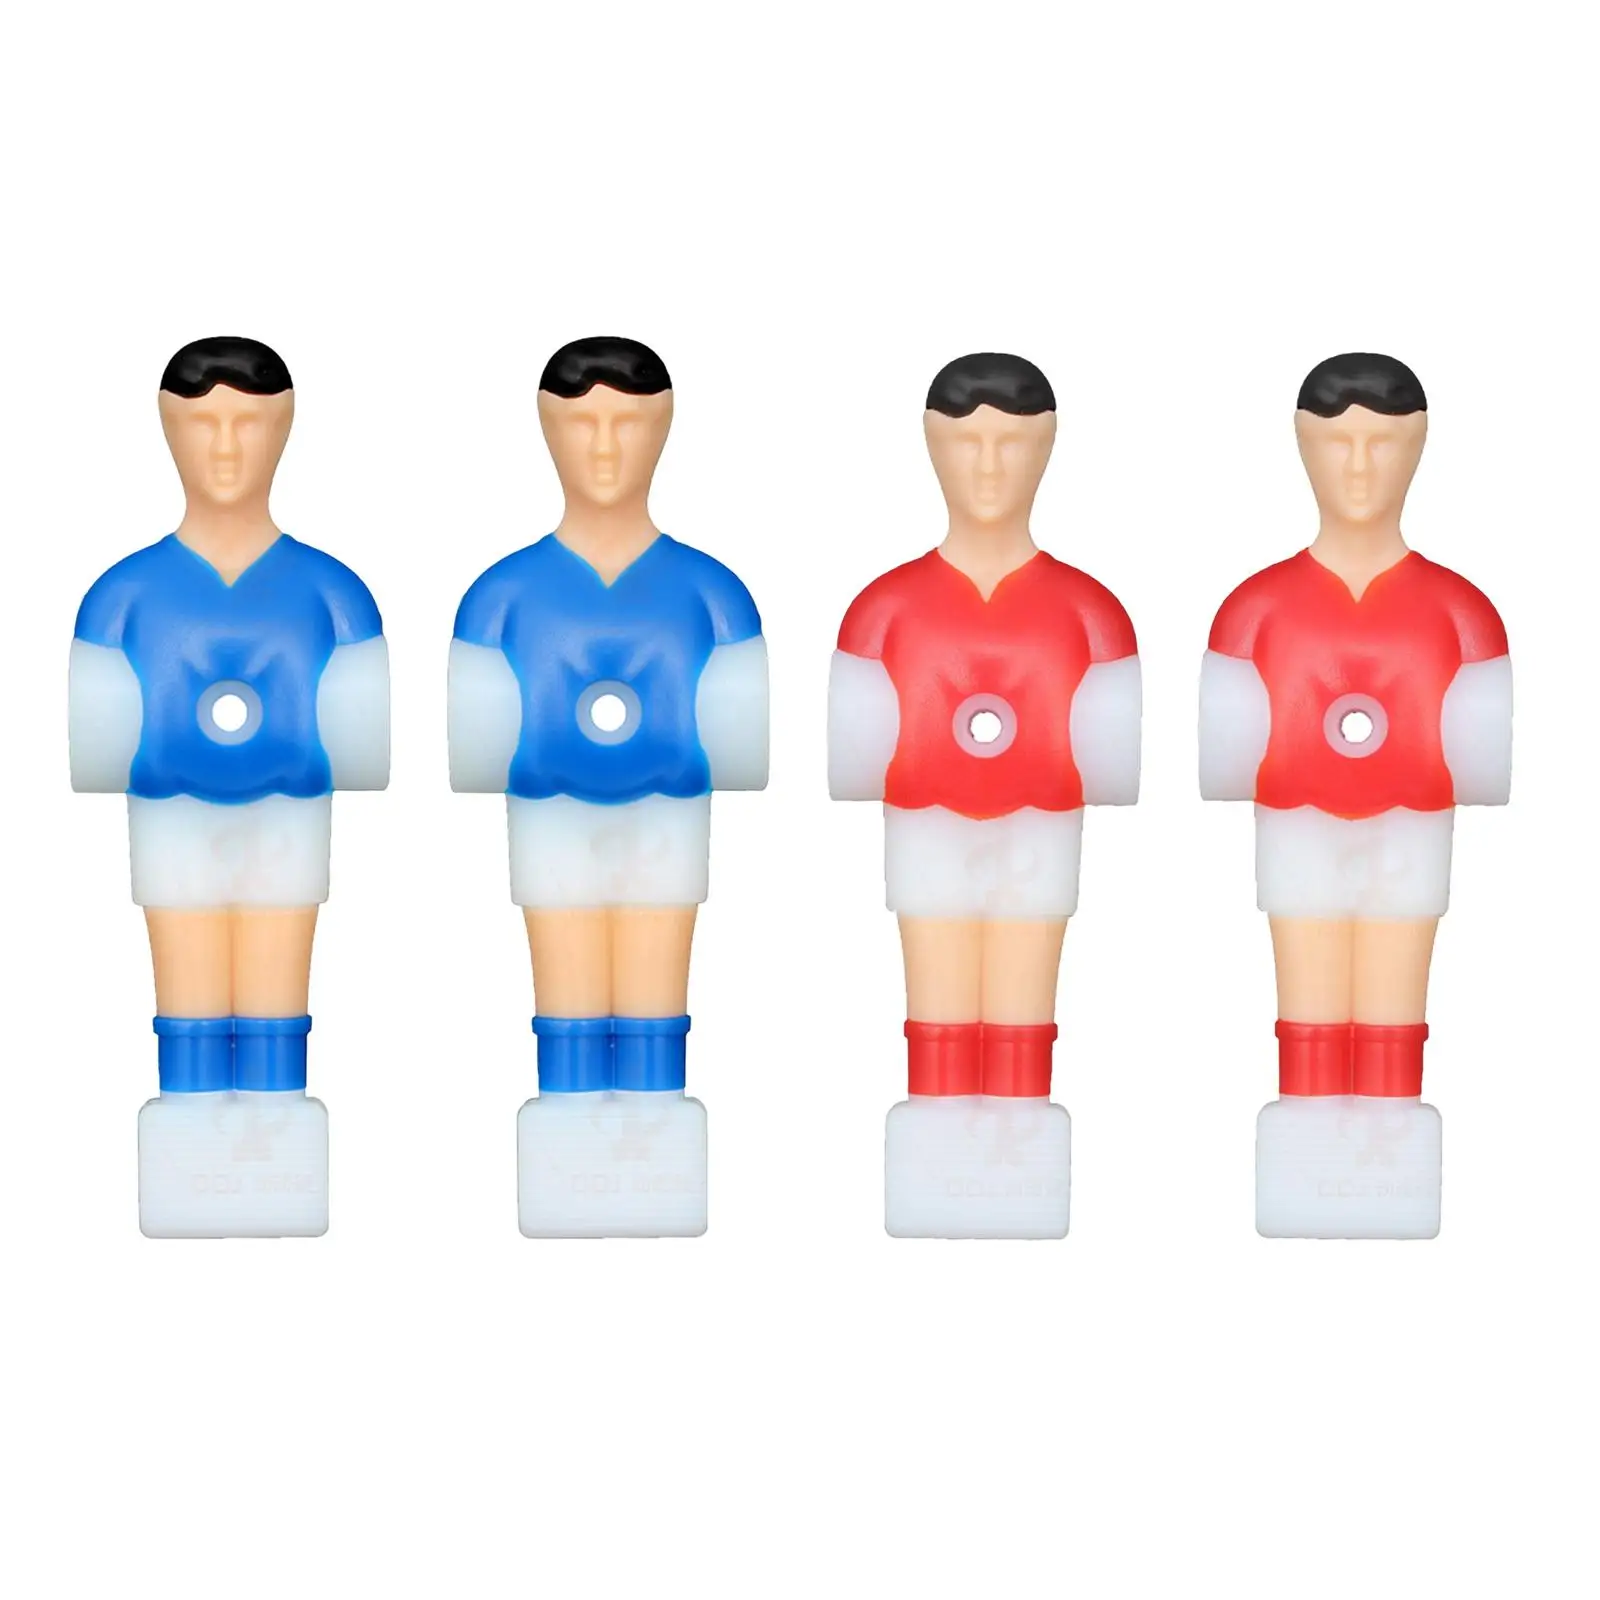 4x Foosball Men Foosball Soccer Table Football Men Football Players Figures